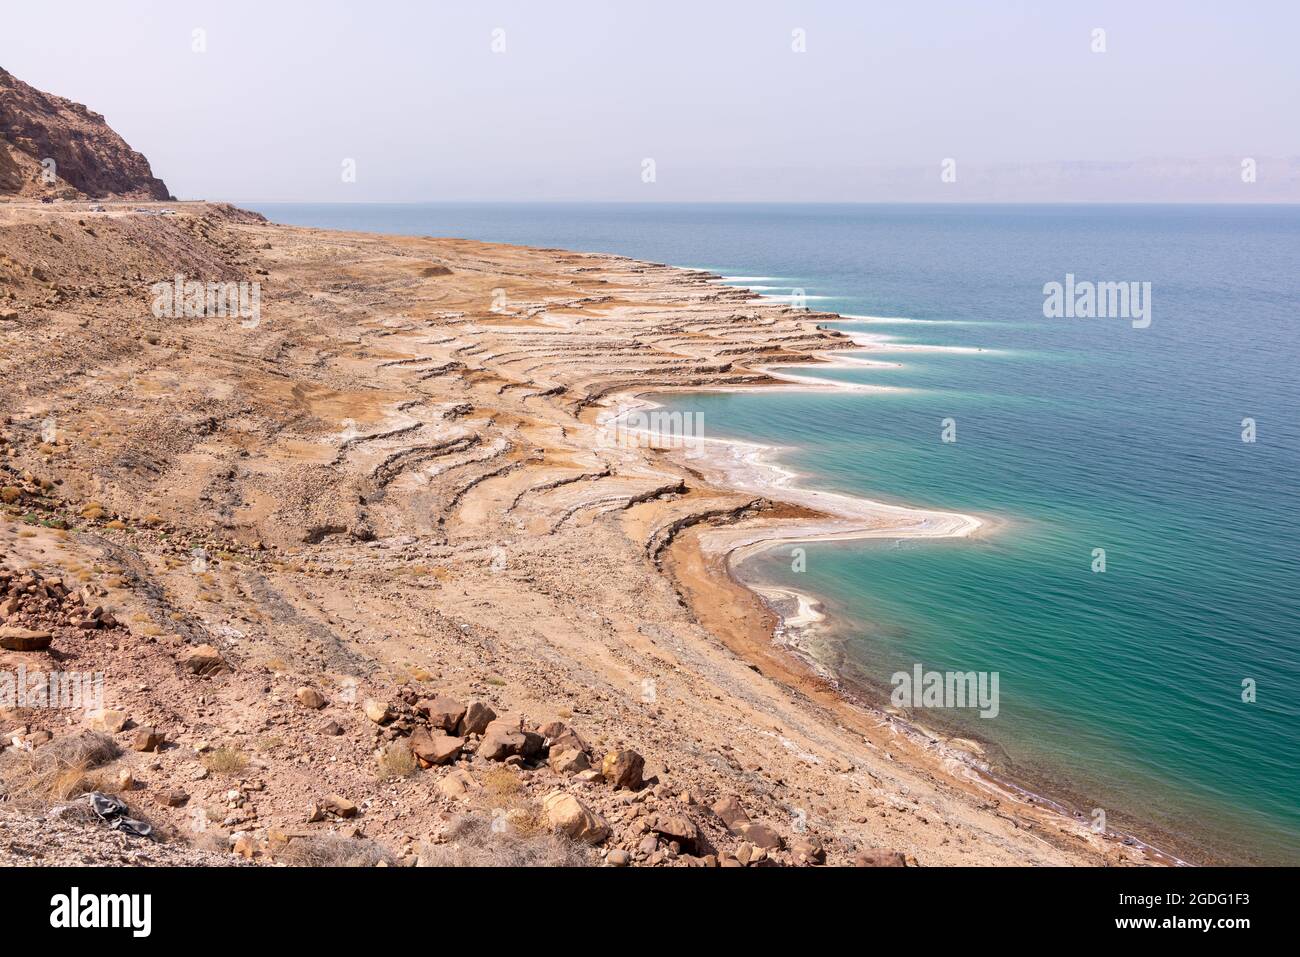 View of the Dead Sea Coastline in Jordan. Stock Photo